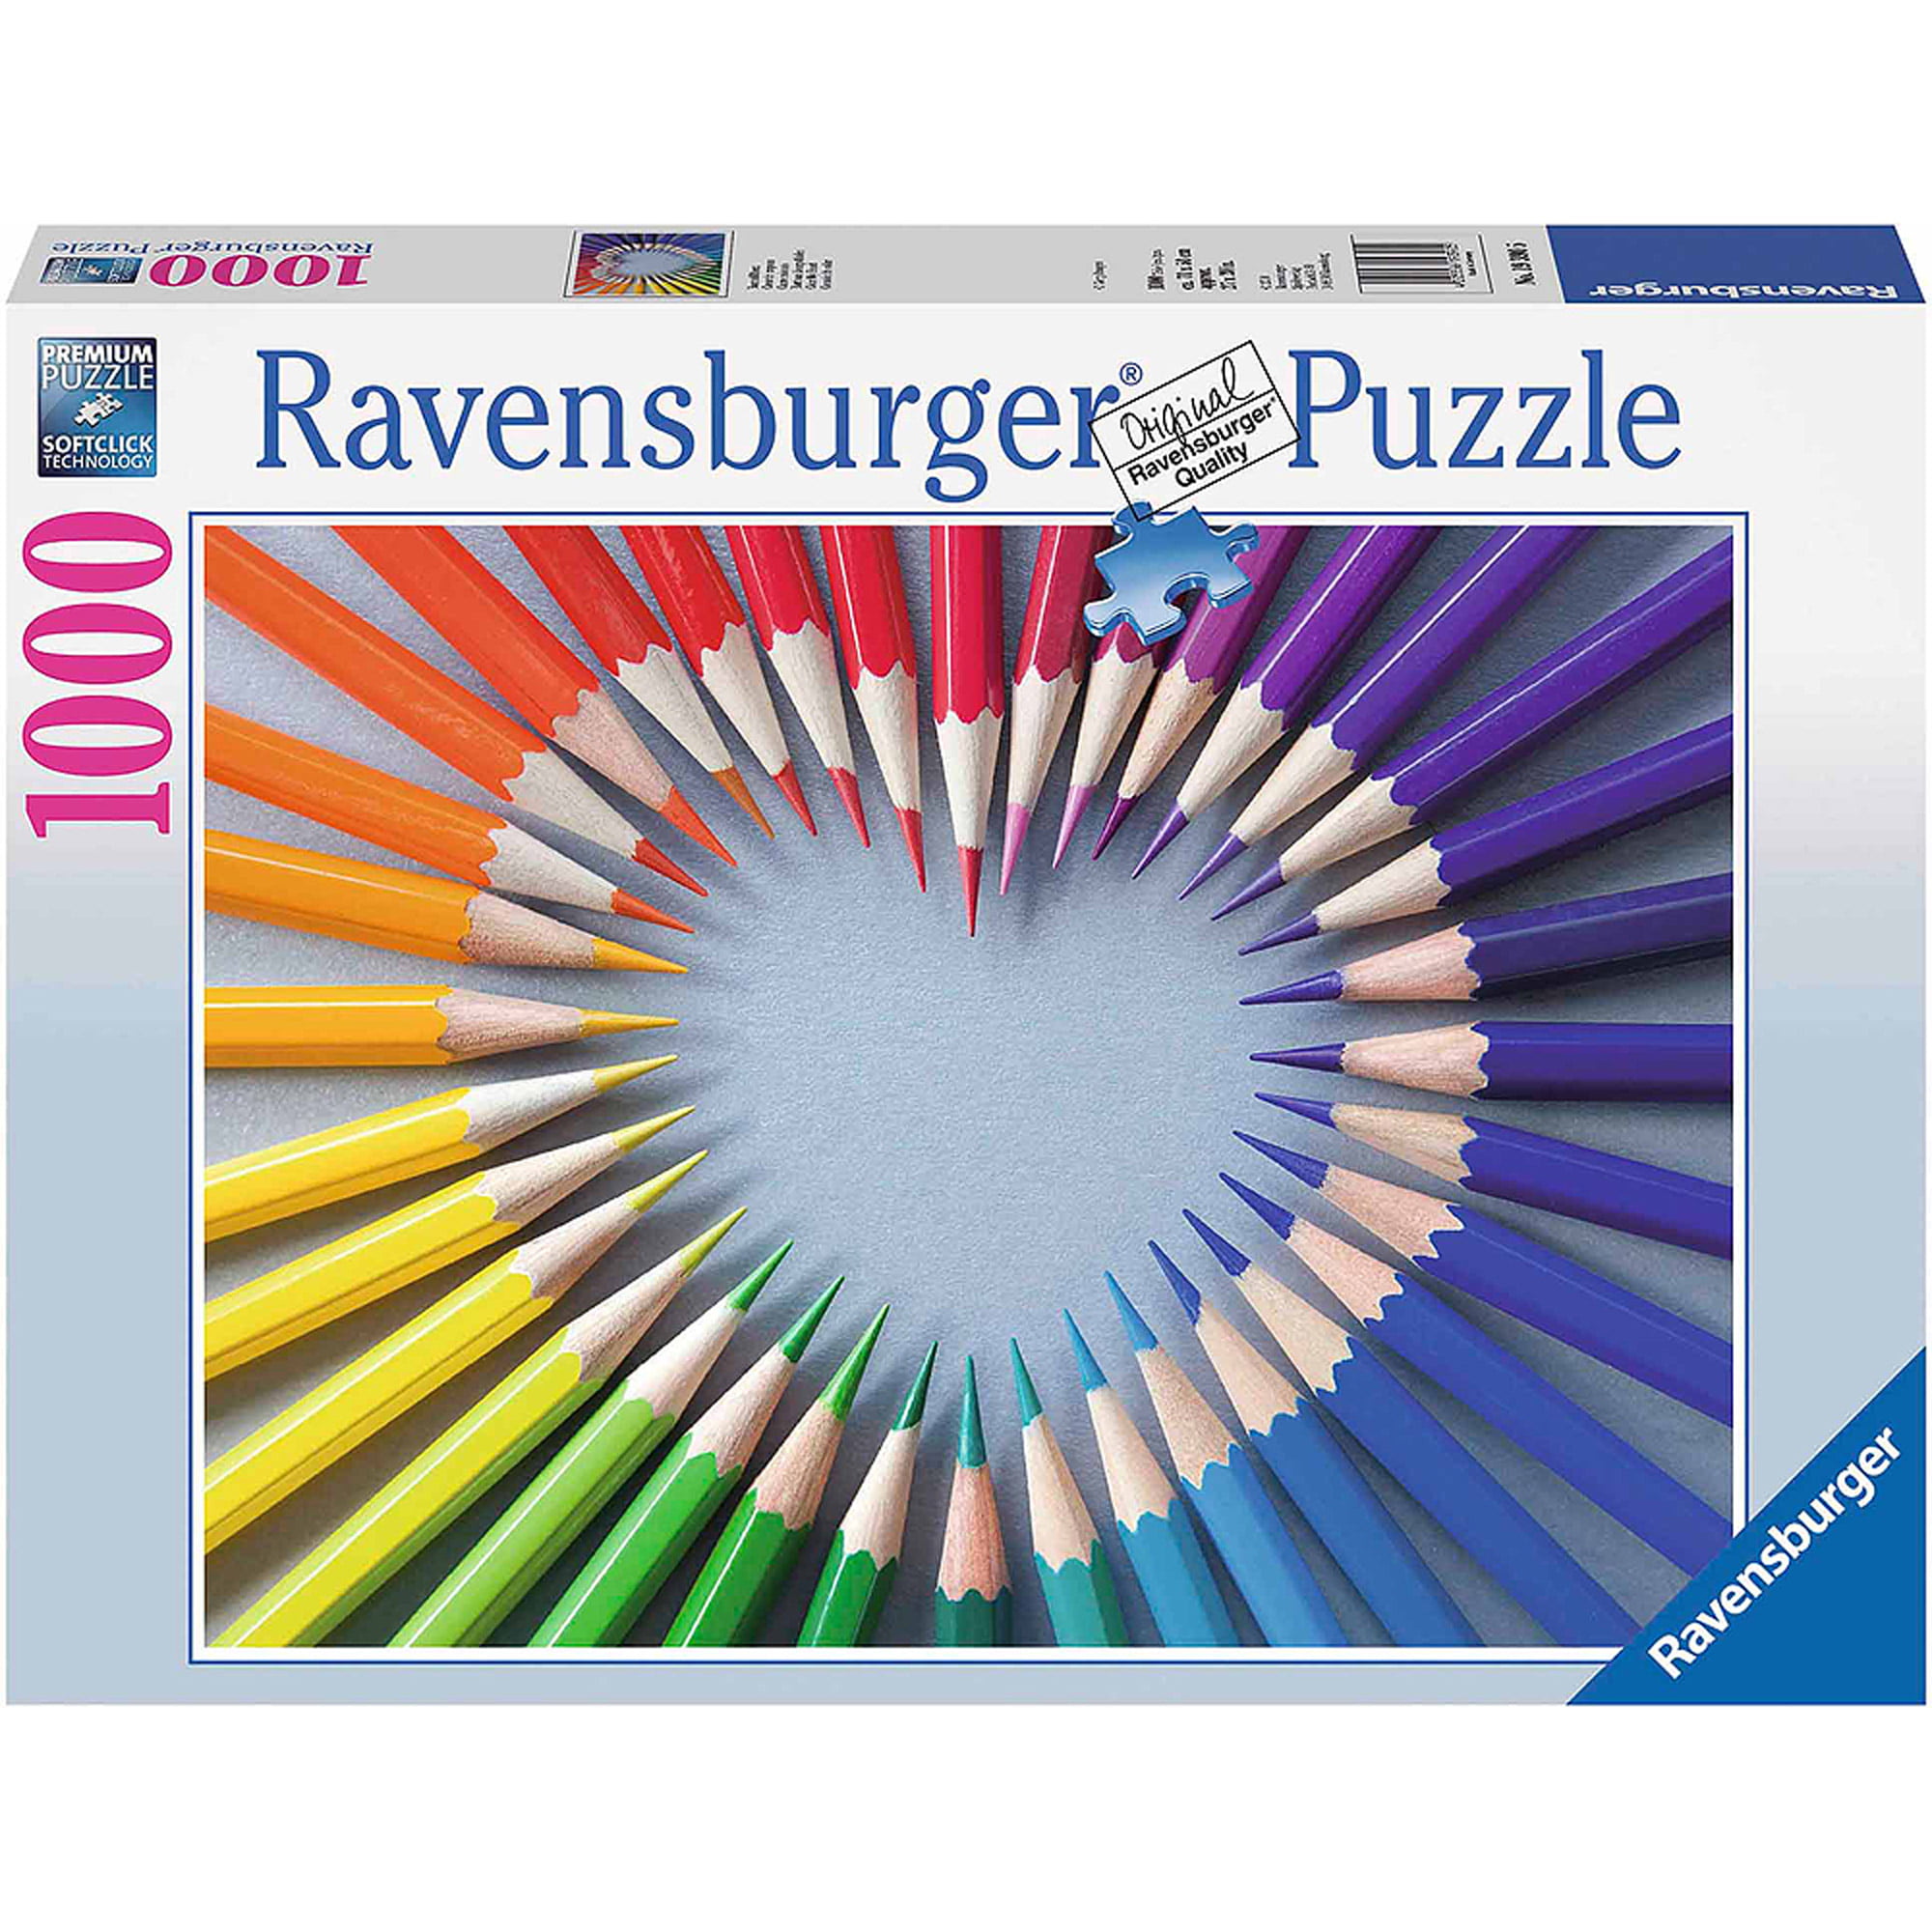 Ravensburger Heart Colour Colored Pencil 1000 Adult Decompression Puzzle Toy New 